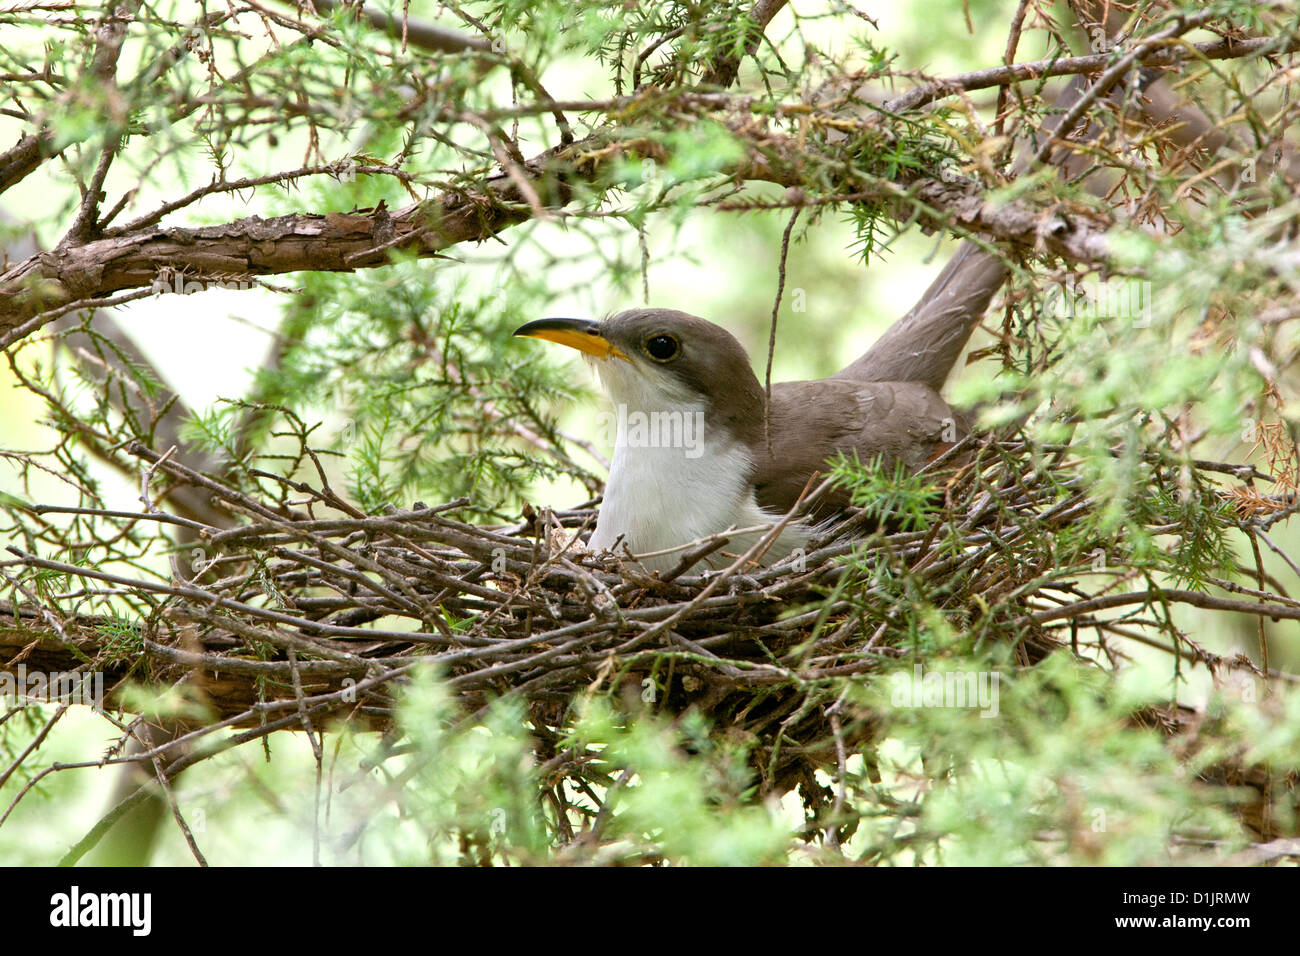 Yellow-billed Cuckoo on nest bird's nest bird nests birds songbird songbirds Ornithology Science Nature Wildlife Environment cuckoos Stock Photo